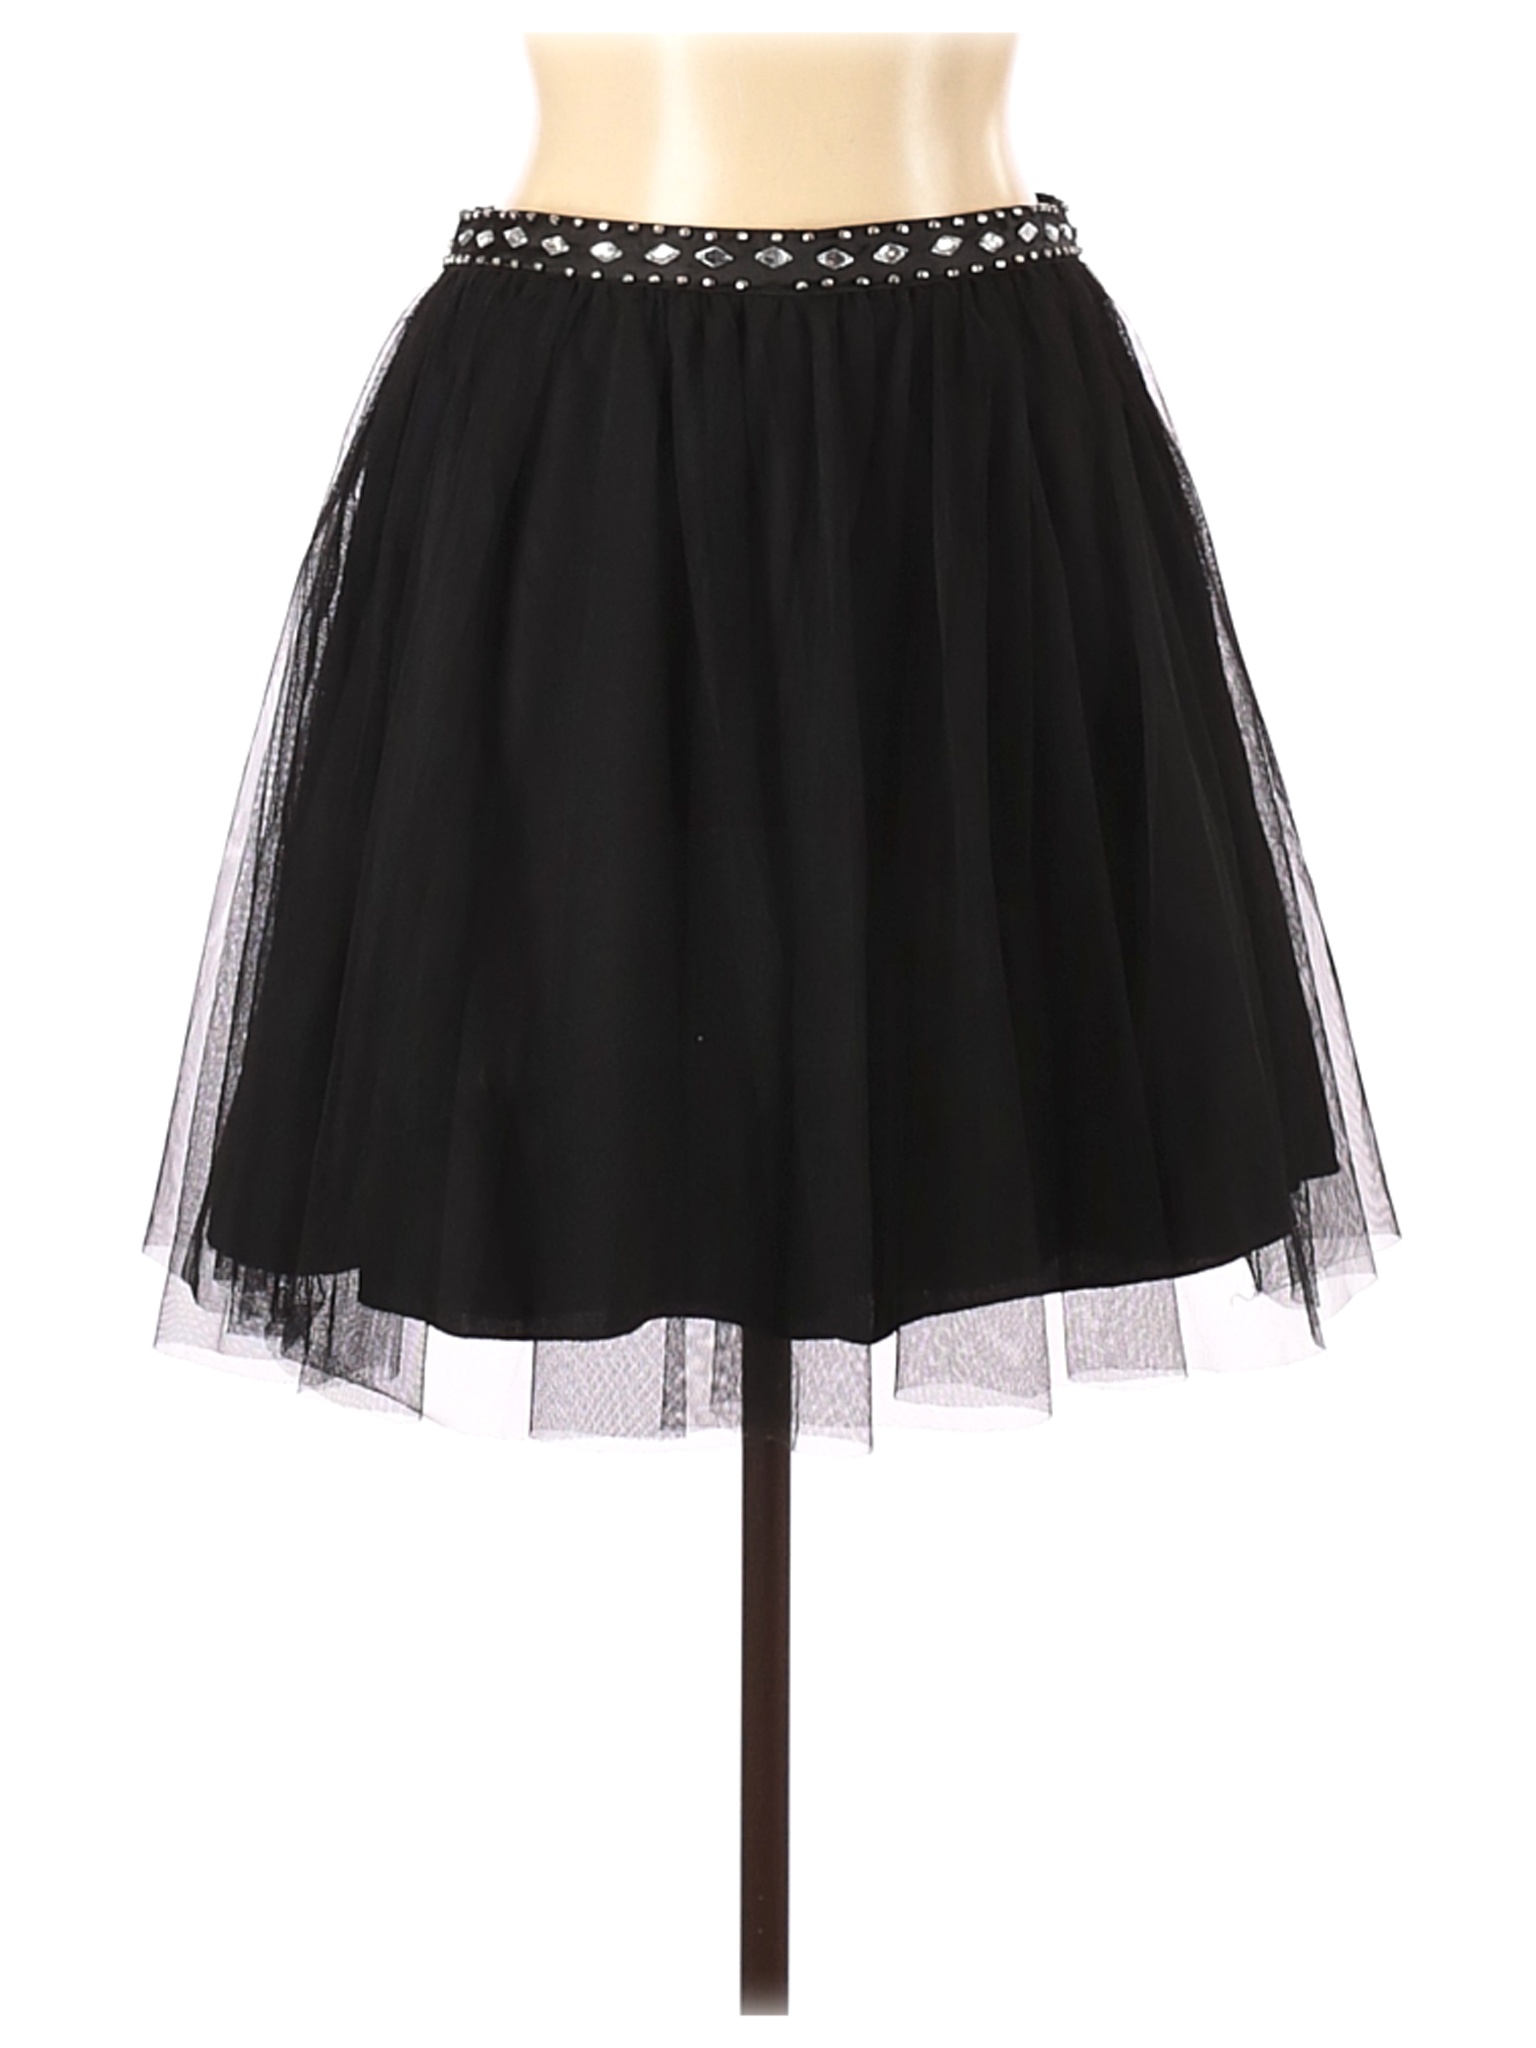 Sequin Hearts Women Black Casual Skirt 13 | eBay